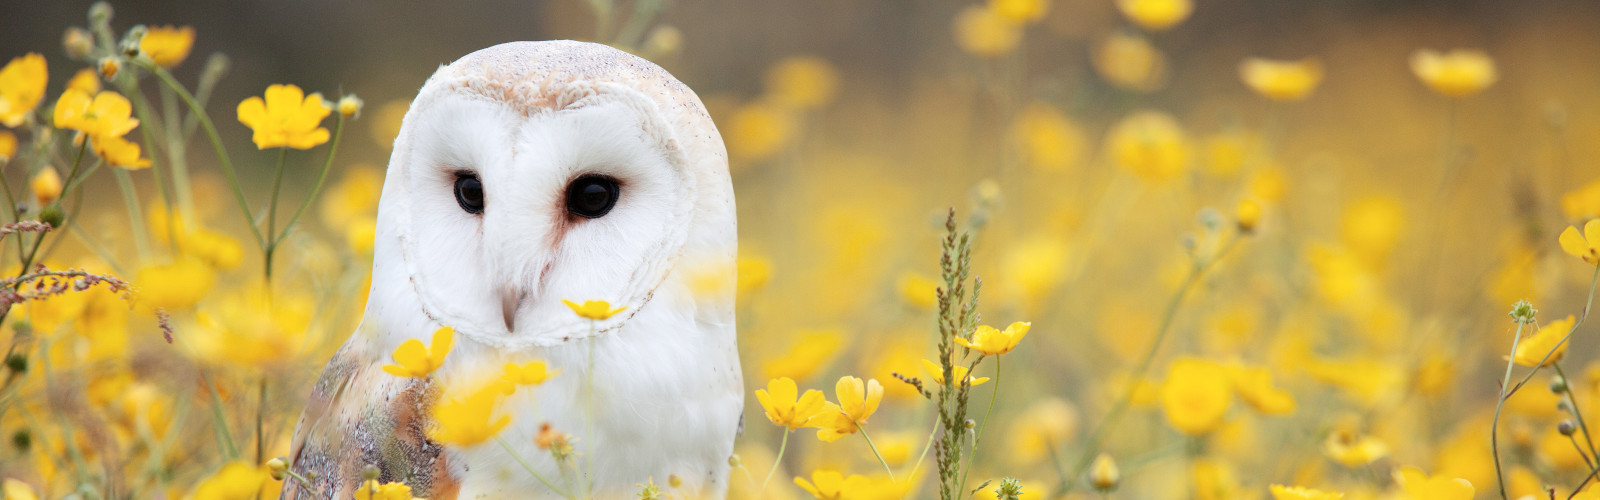 An owl sitting in a field of flowers